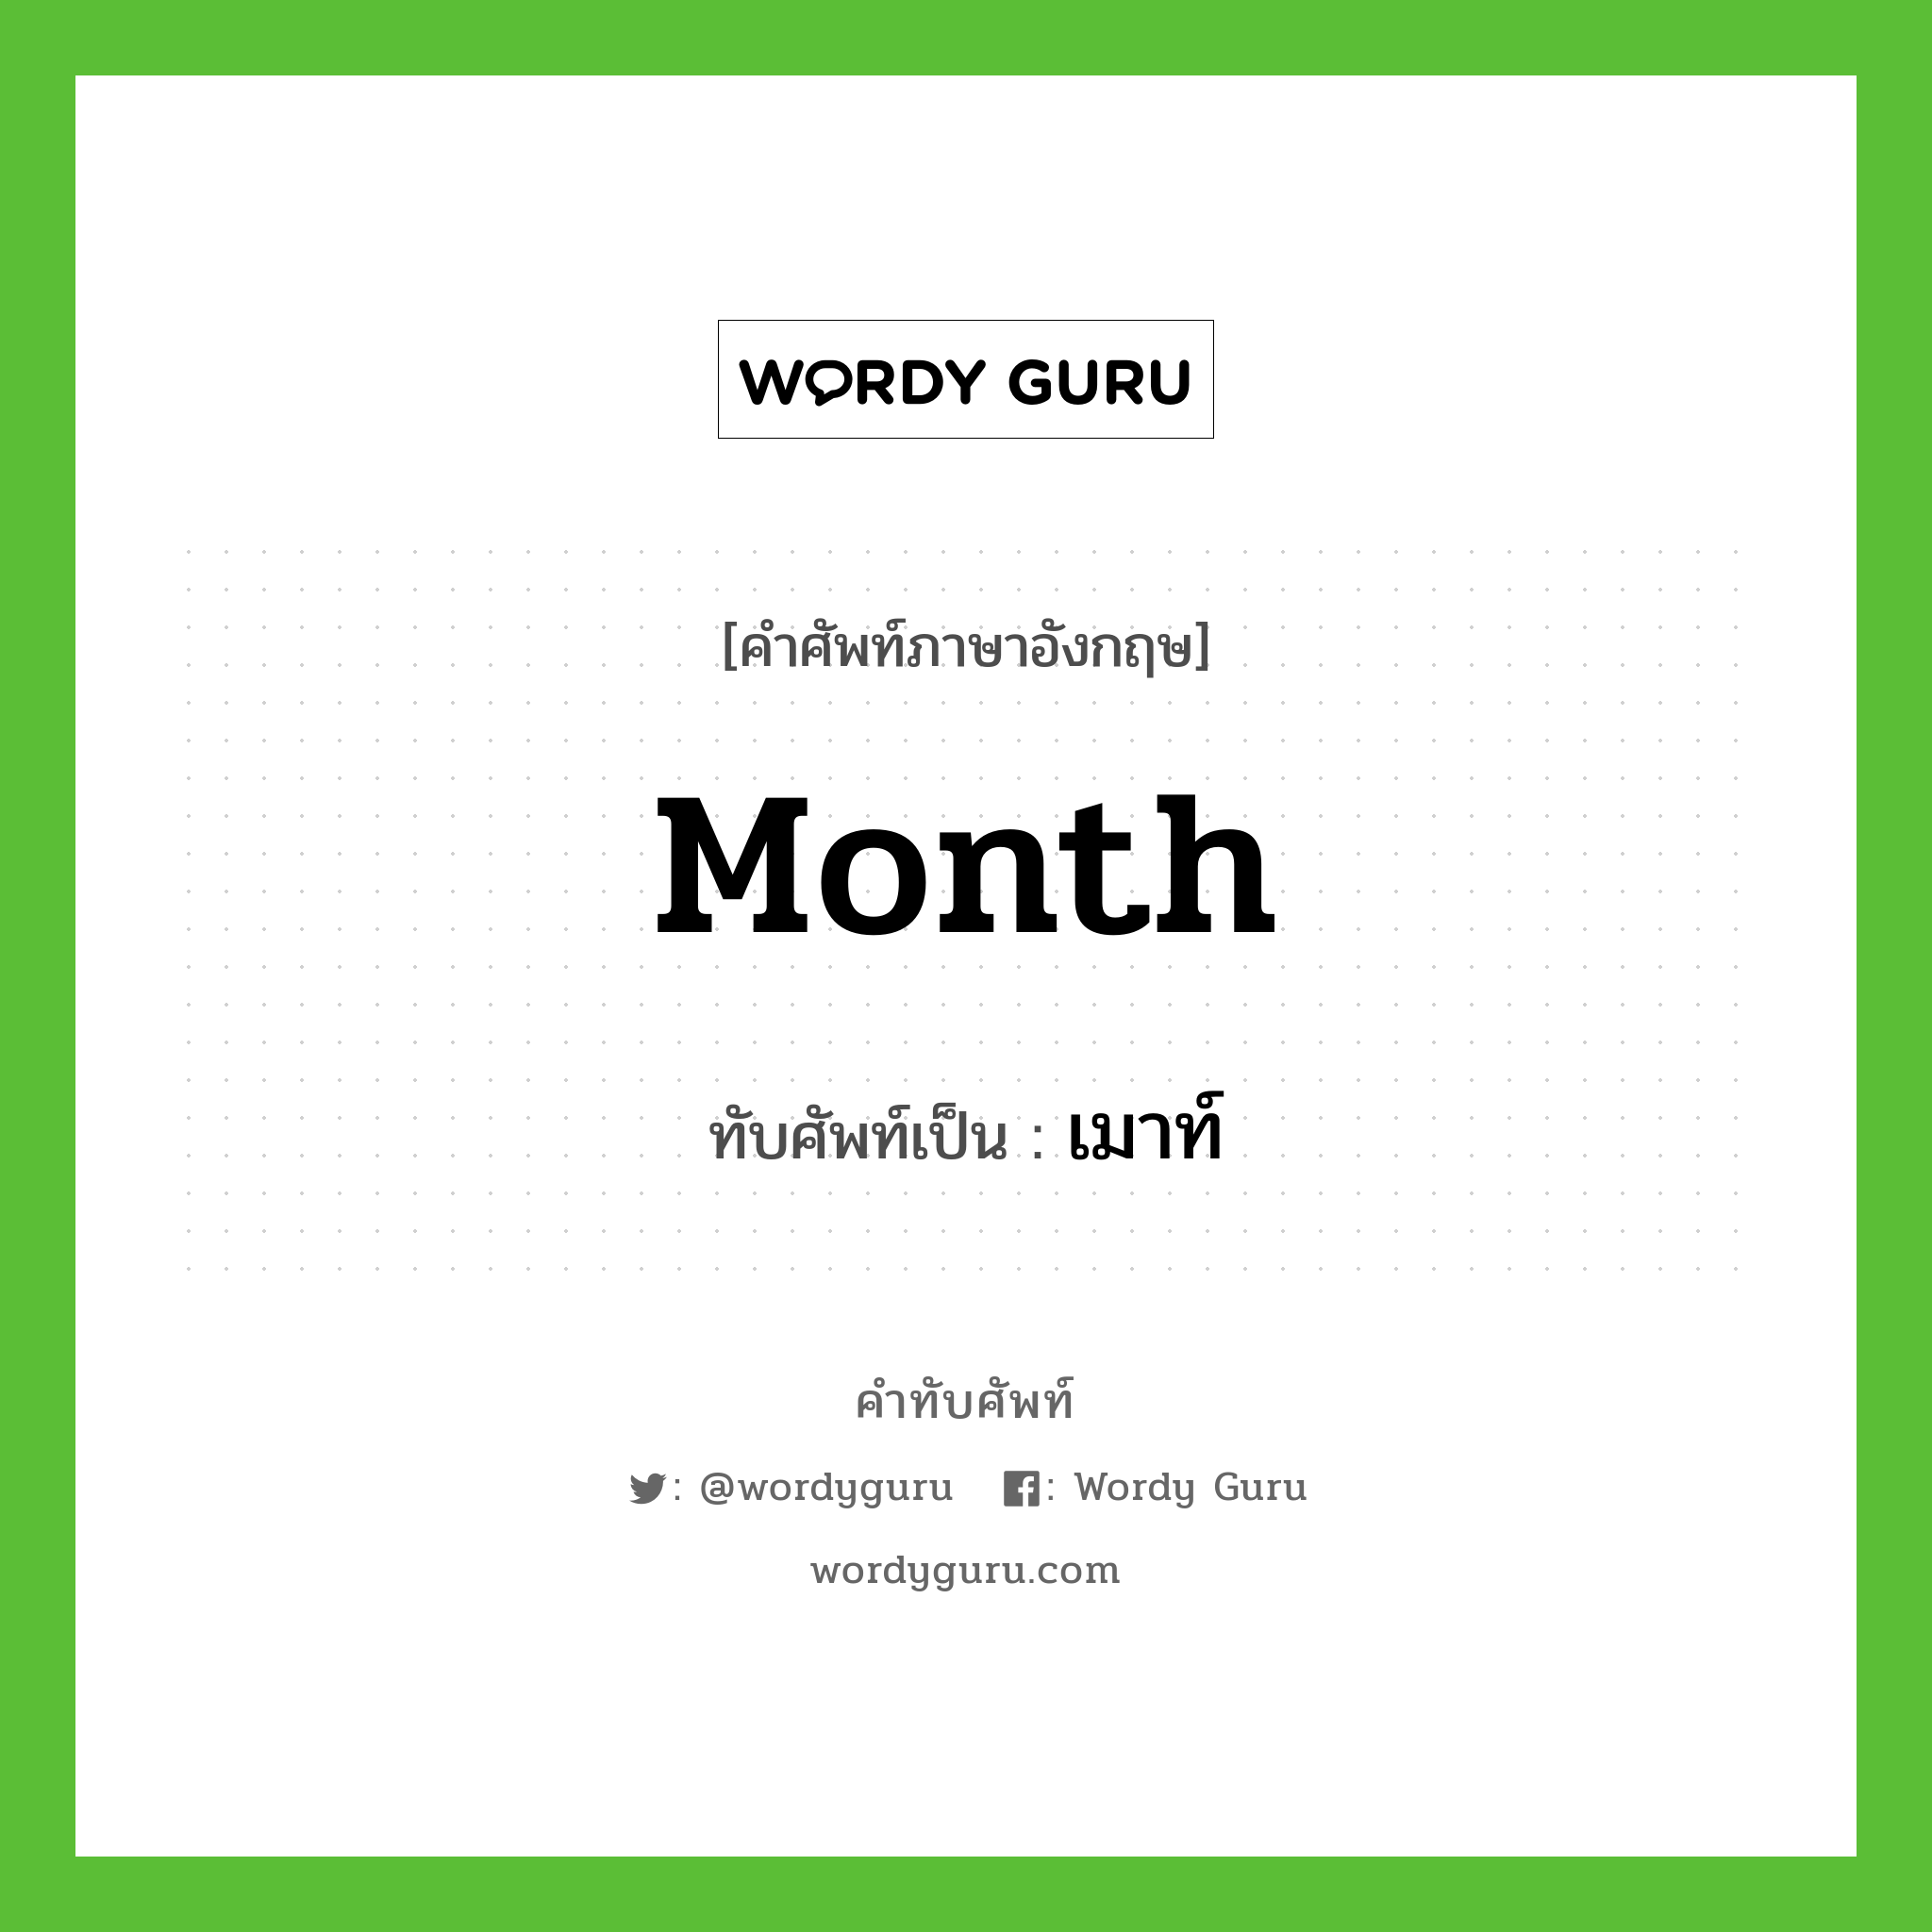 Month เขียนเป็นคำไทยว่าอะไร? | Wordy Guru